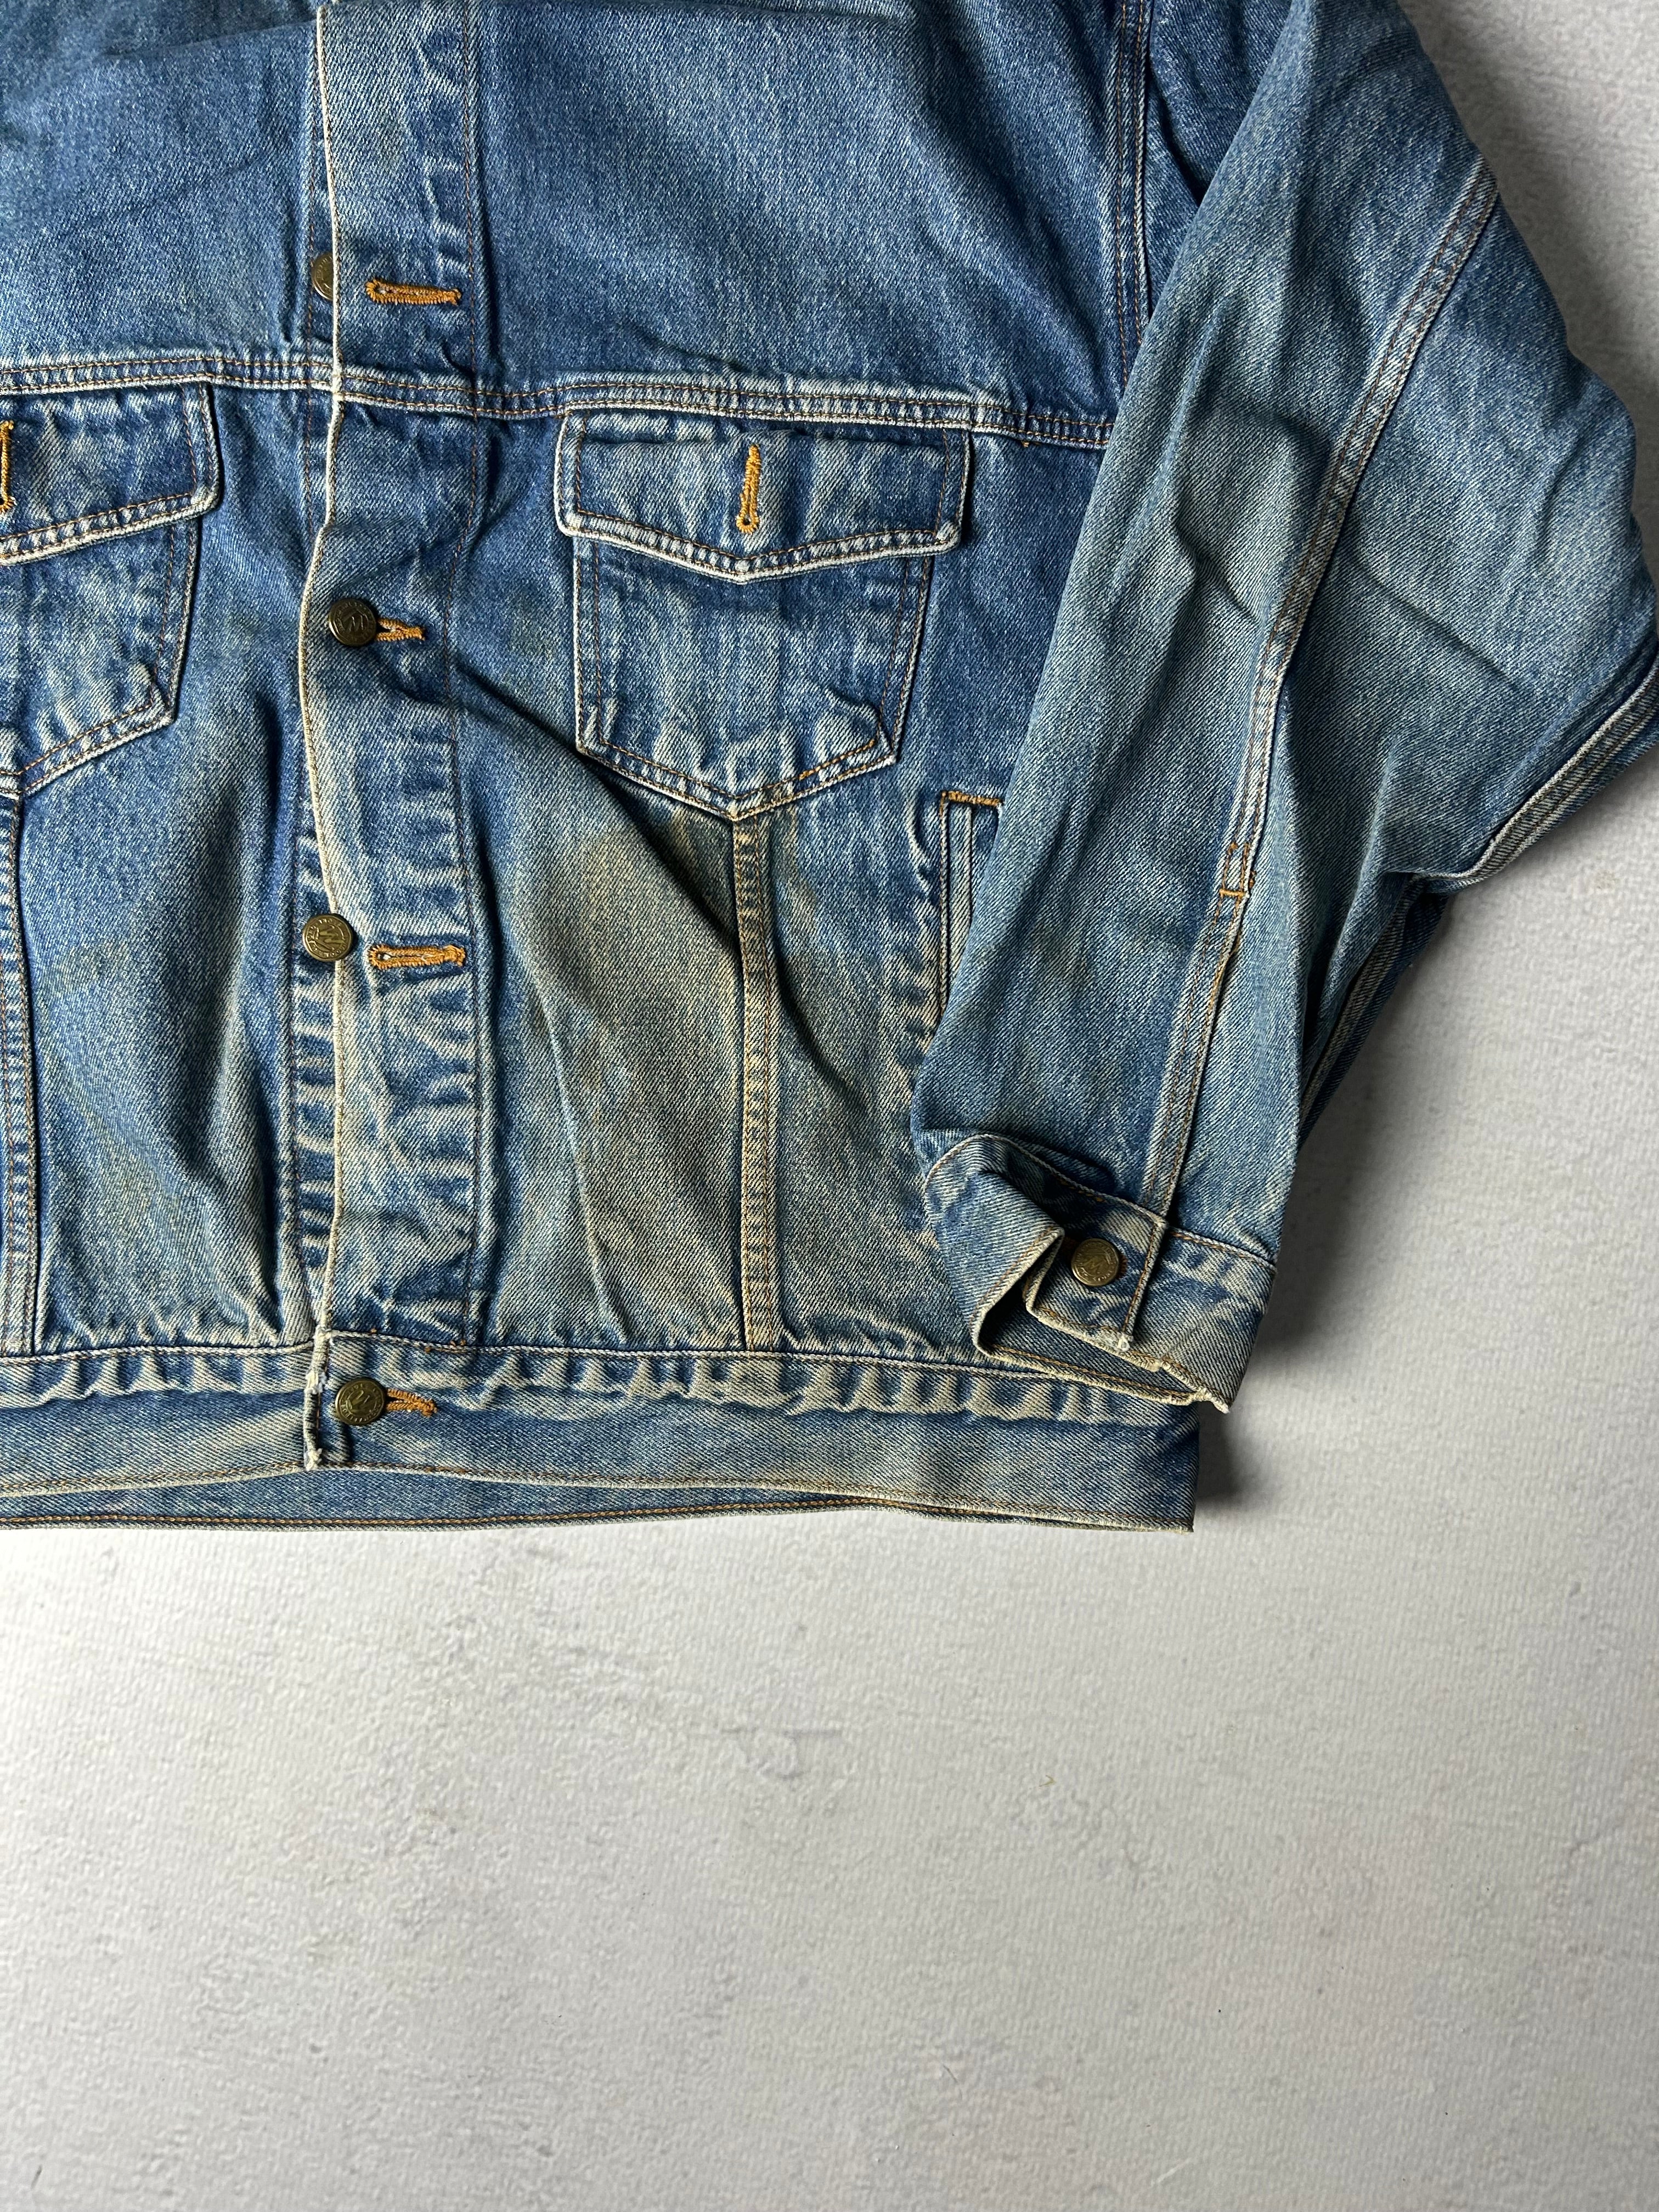 Vintage Marlboro Denim Jacket - Men's Large